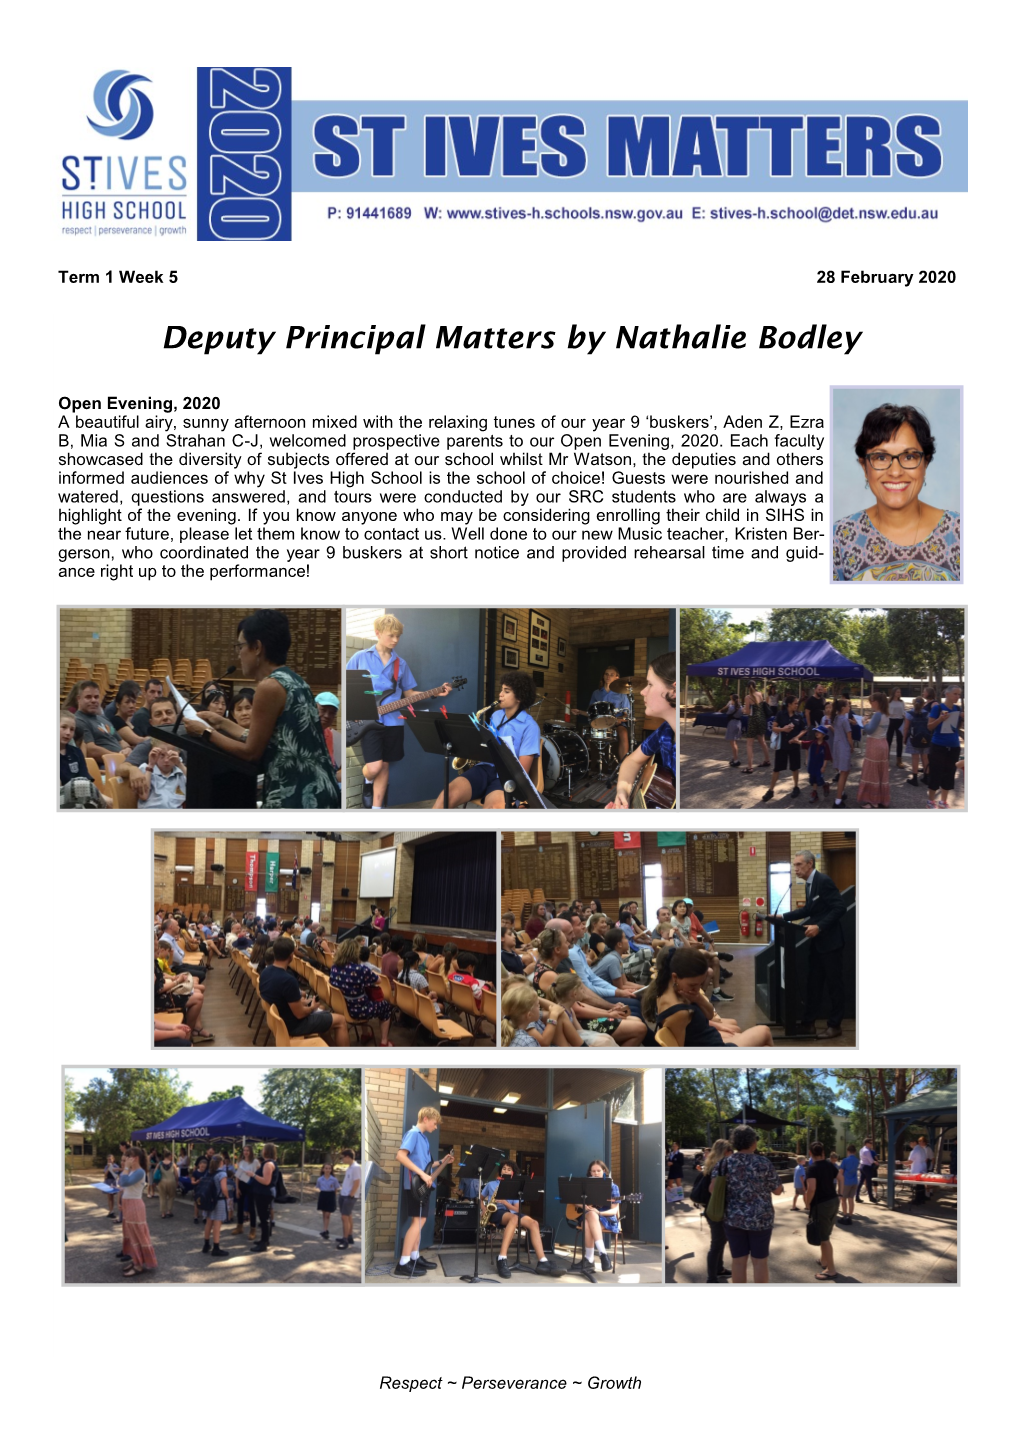 Deputy Principal Matters by Nathalie Bodley